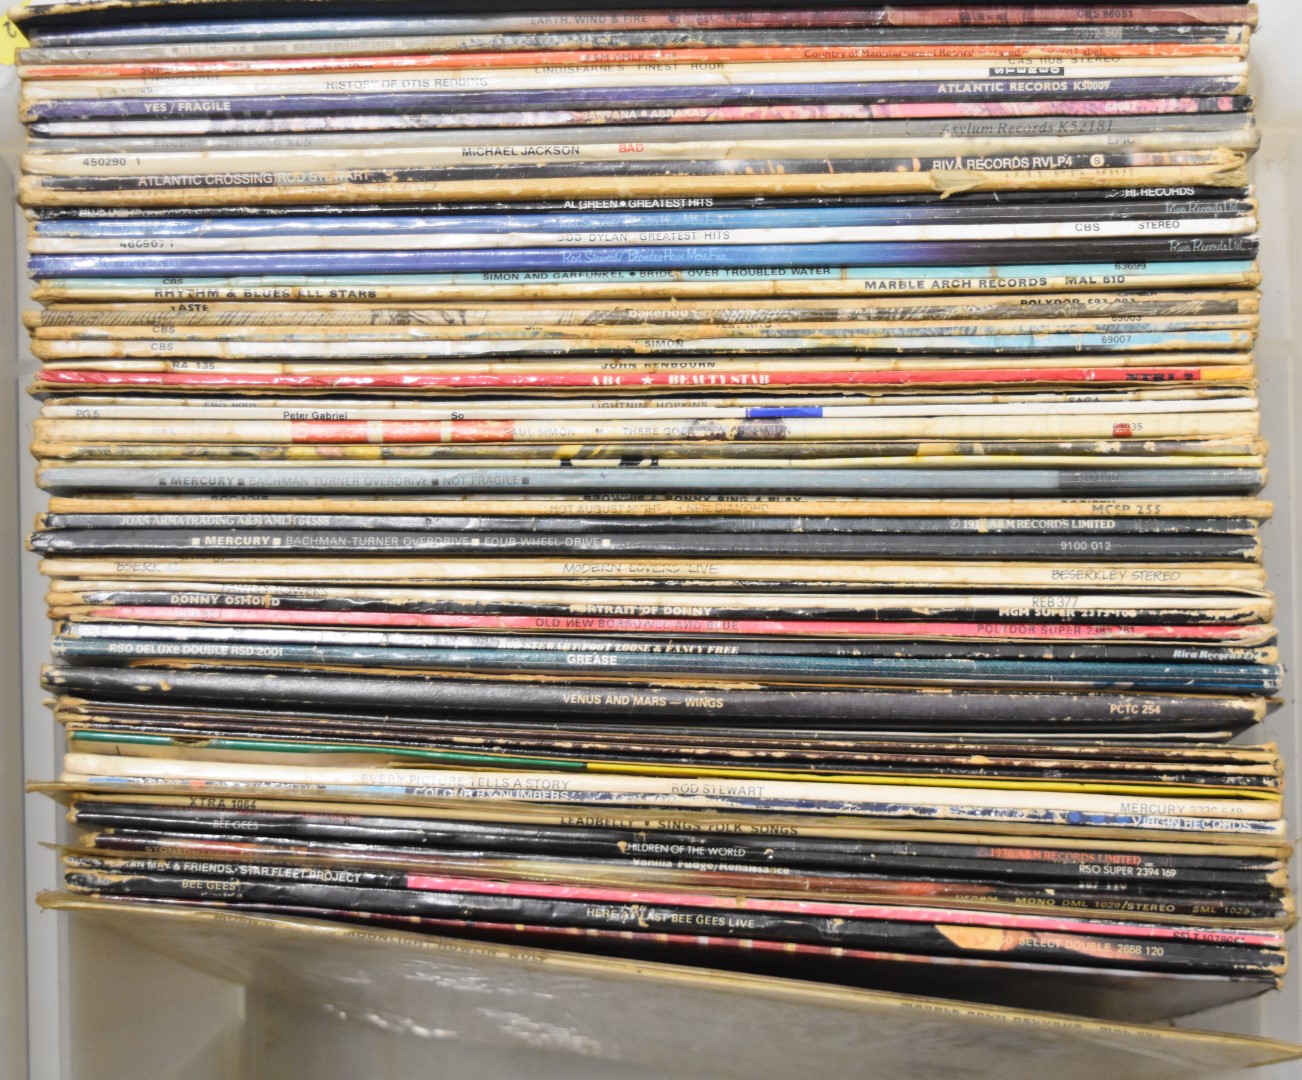 Approximately 60 mixed genre LPs including Otis Redding, Bob Dylan, Rod Stewart, Simon & - Image 4 of 4